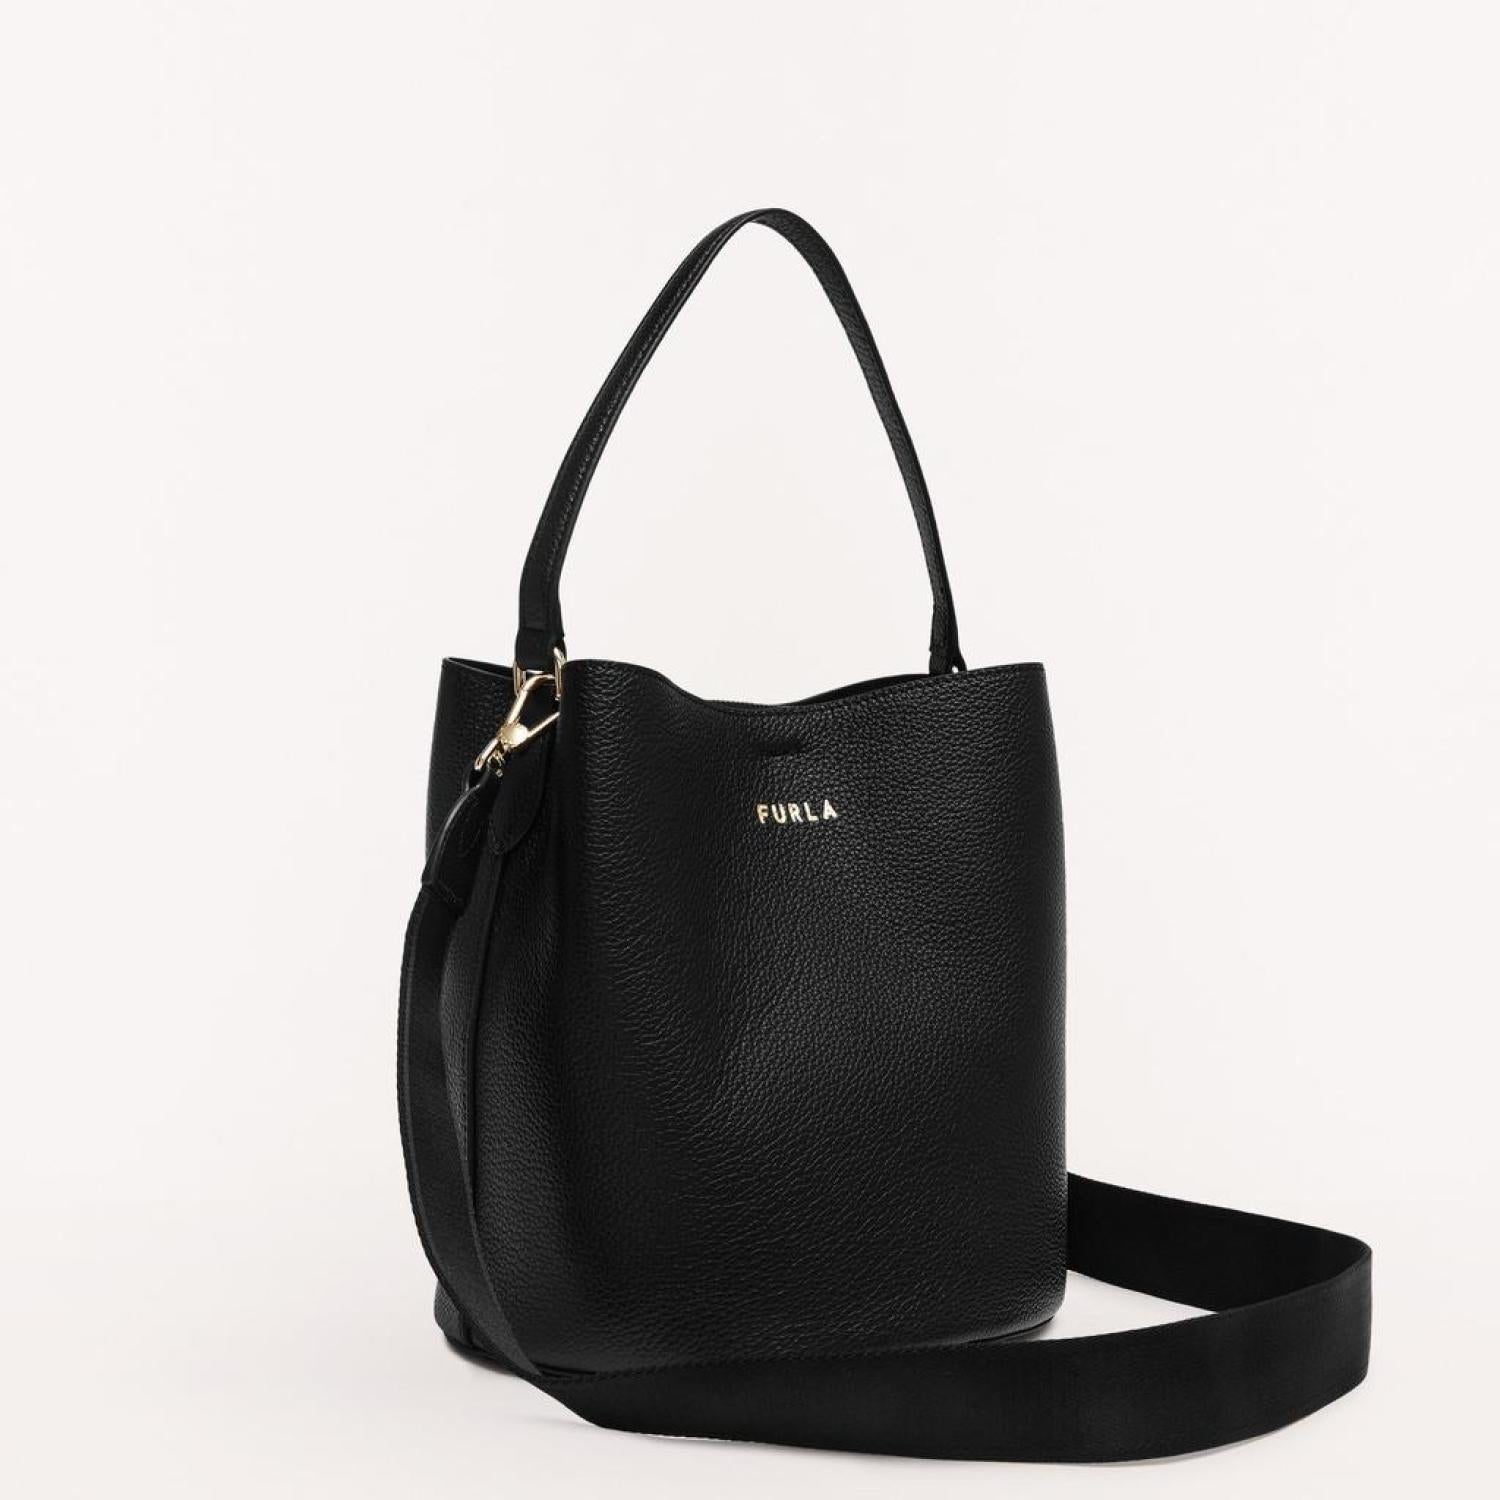 FURLA CANDY BAG | Bags, Furla bags, Purses and handbags